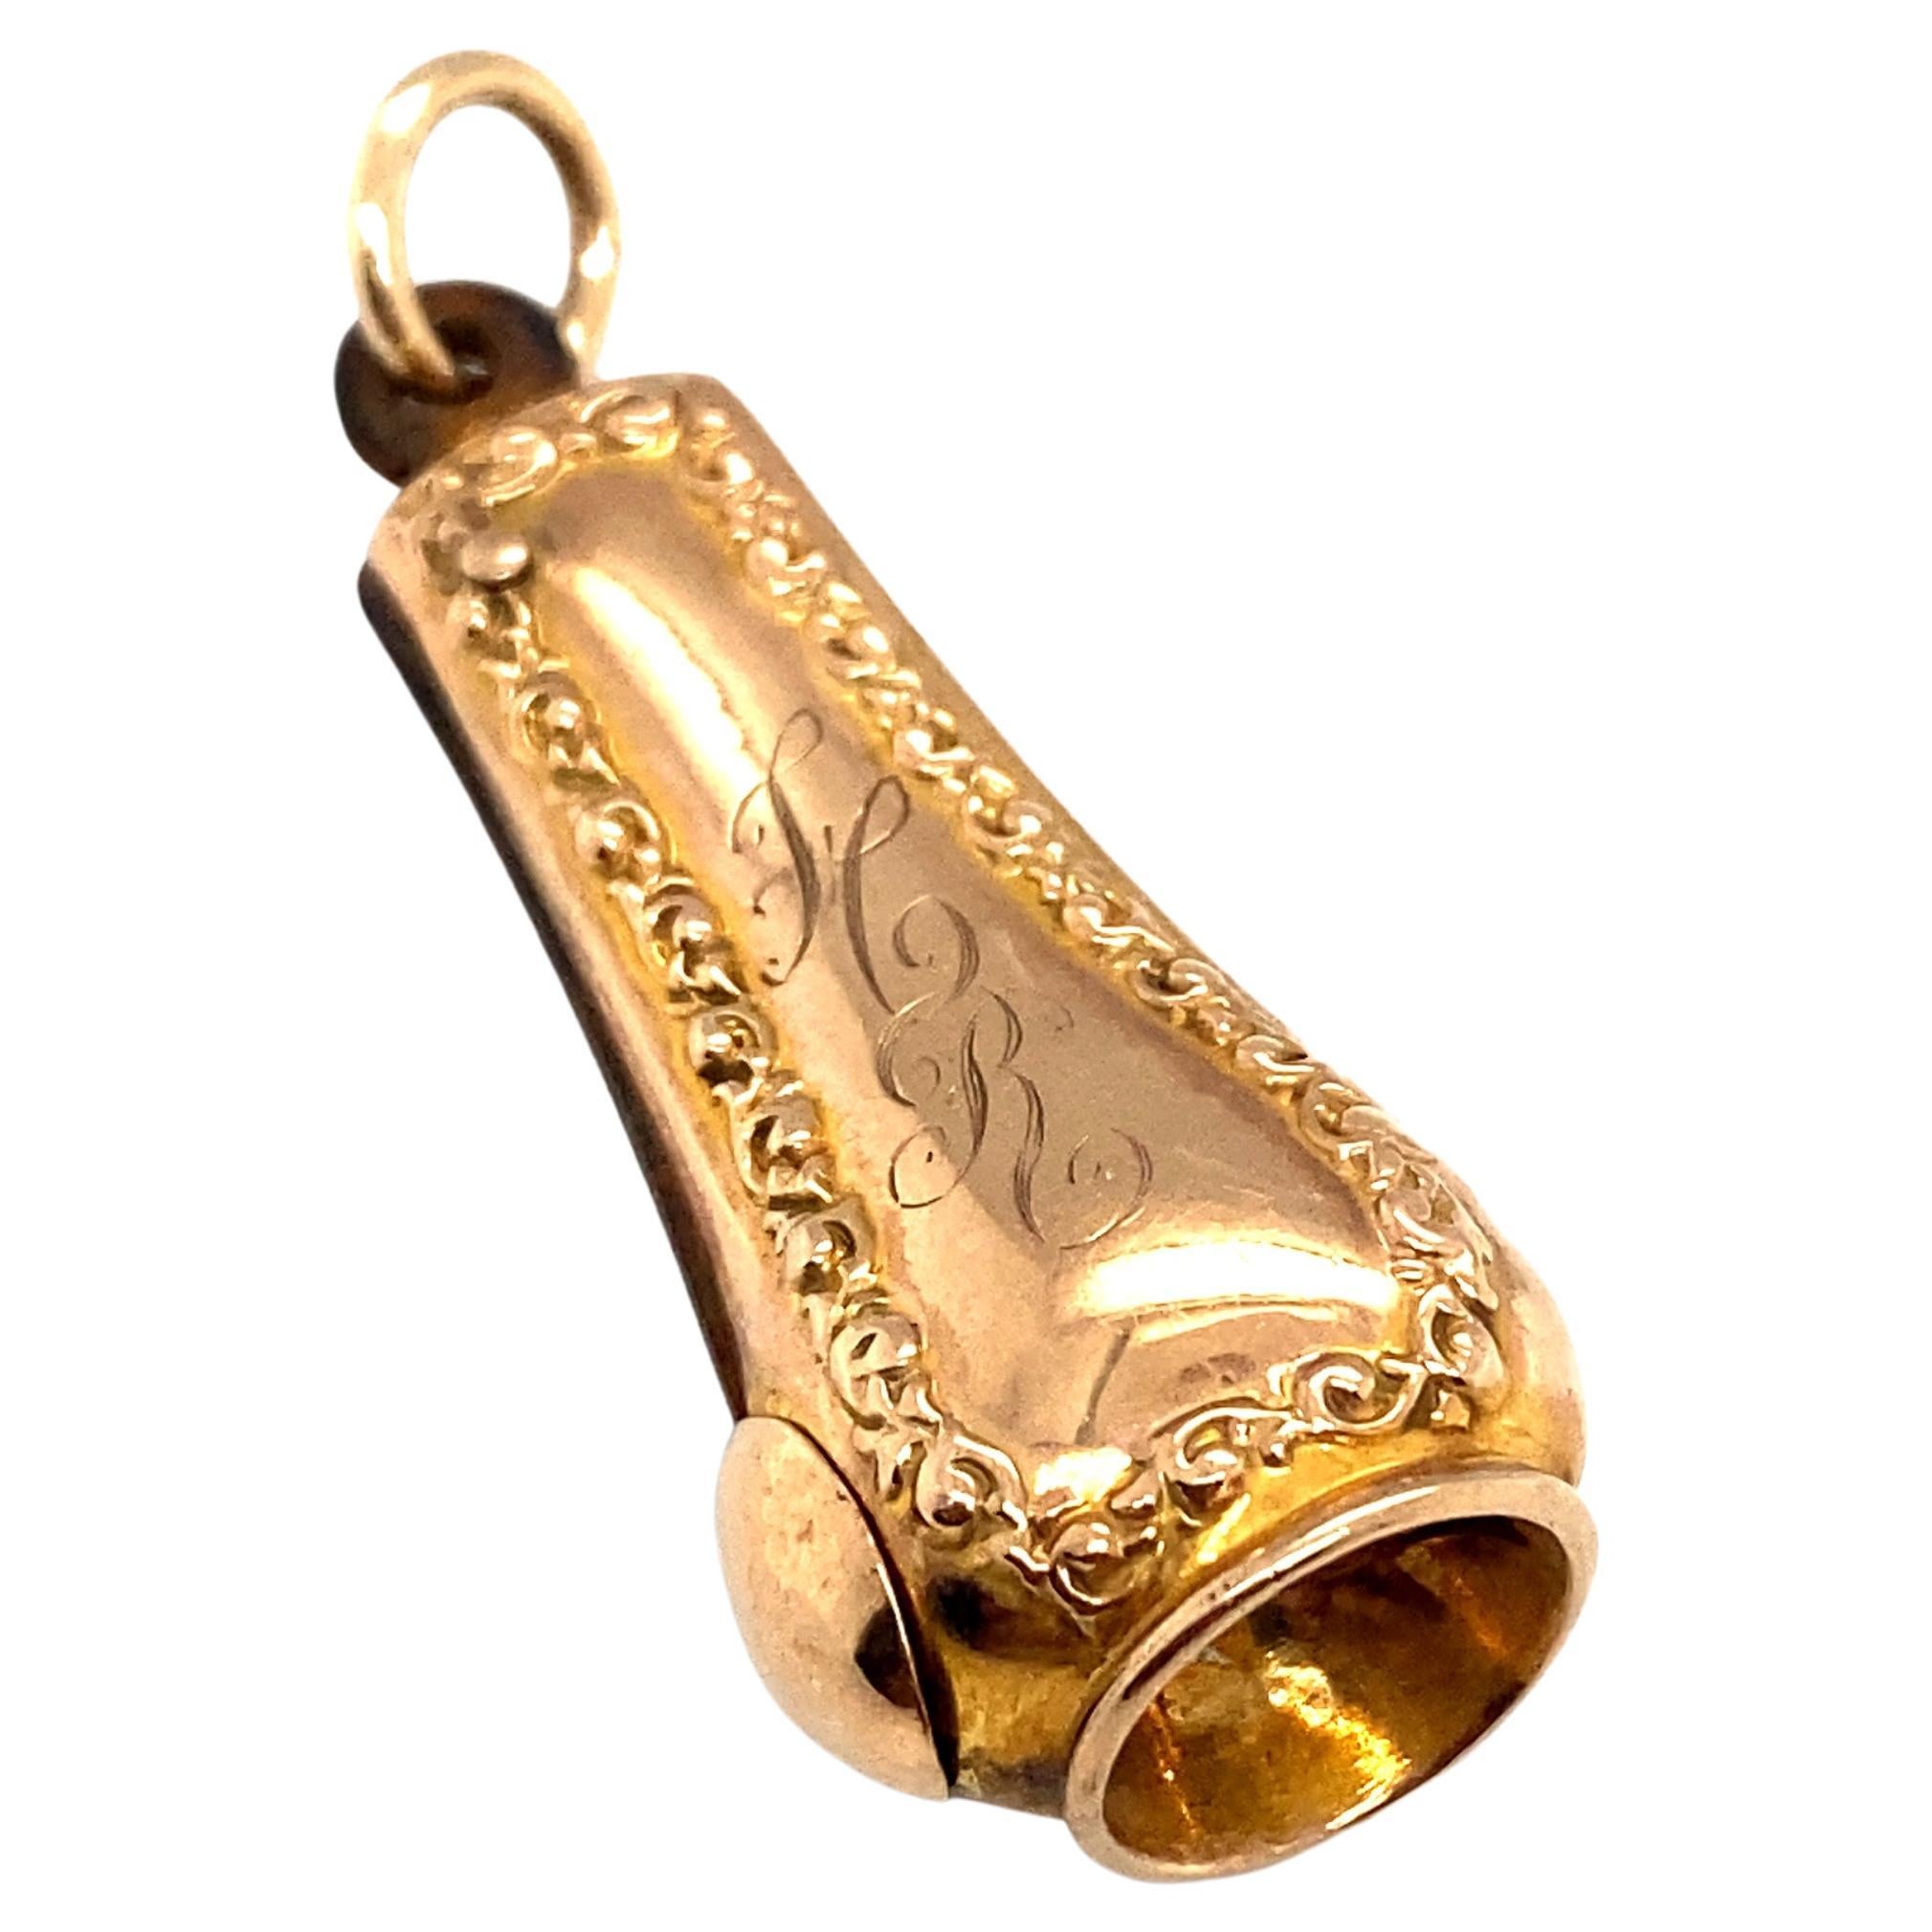 Circa 1890s Monogrammed HR Cigar Cutter Charm in 10 Karat Yellow Gold